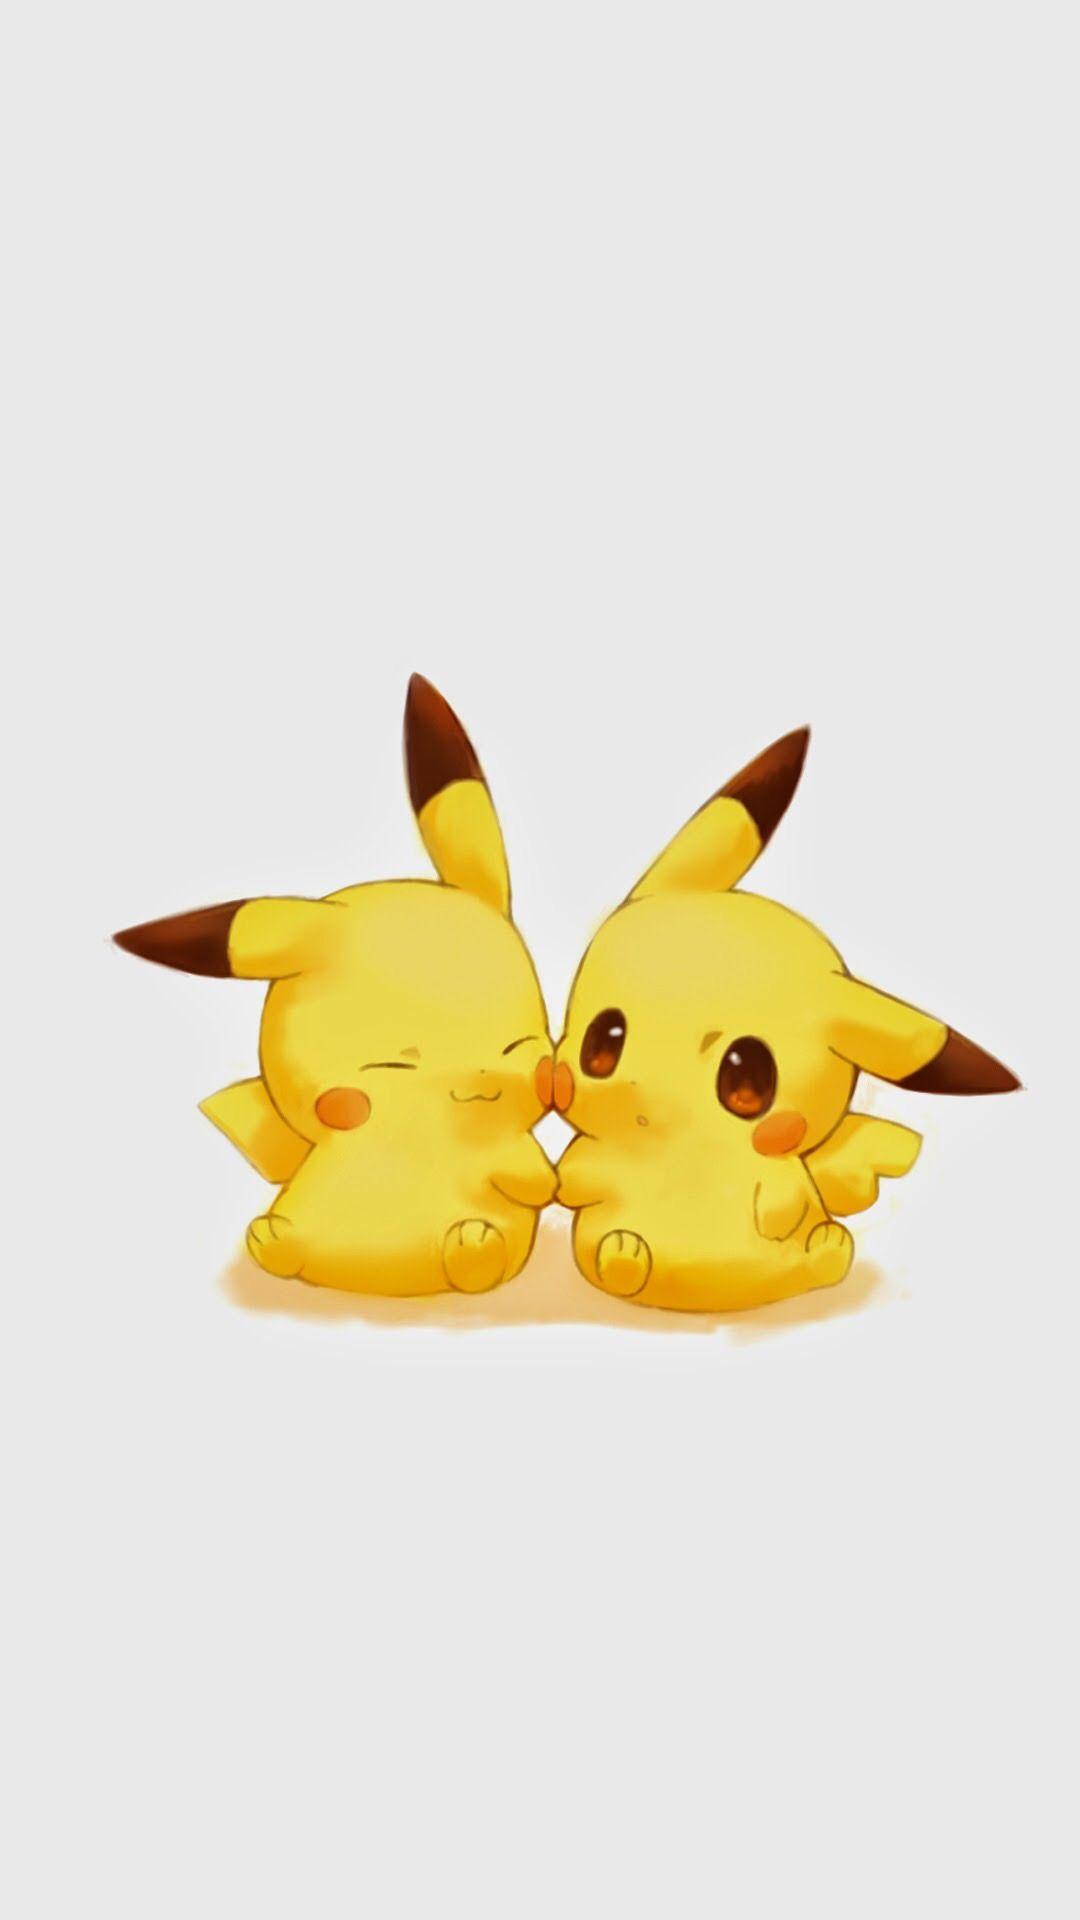 Pikachu Iphone Wallpapers